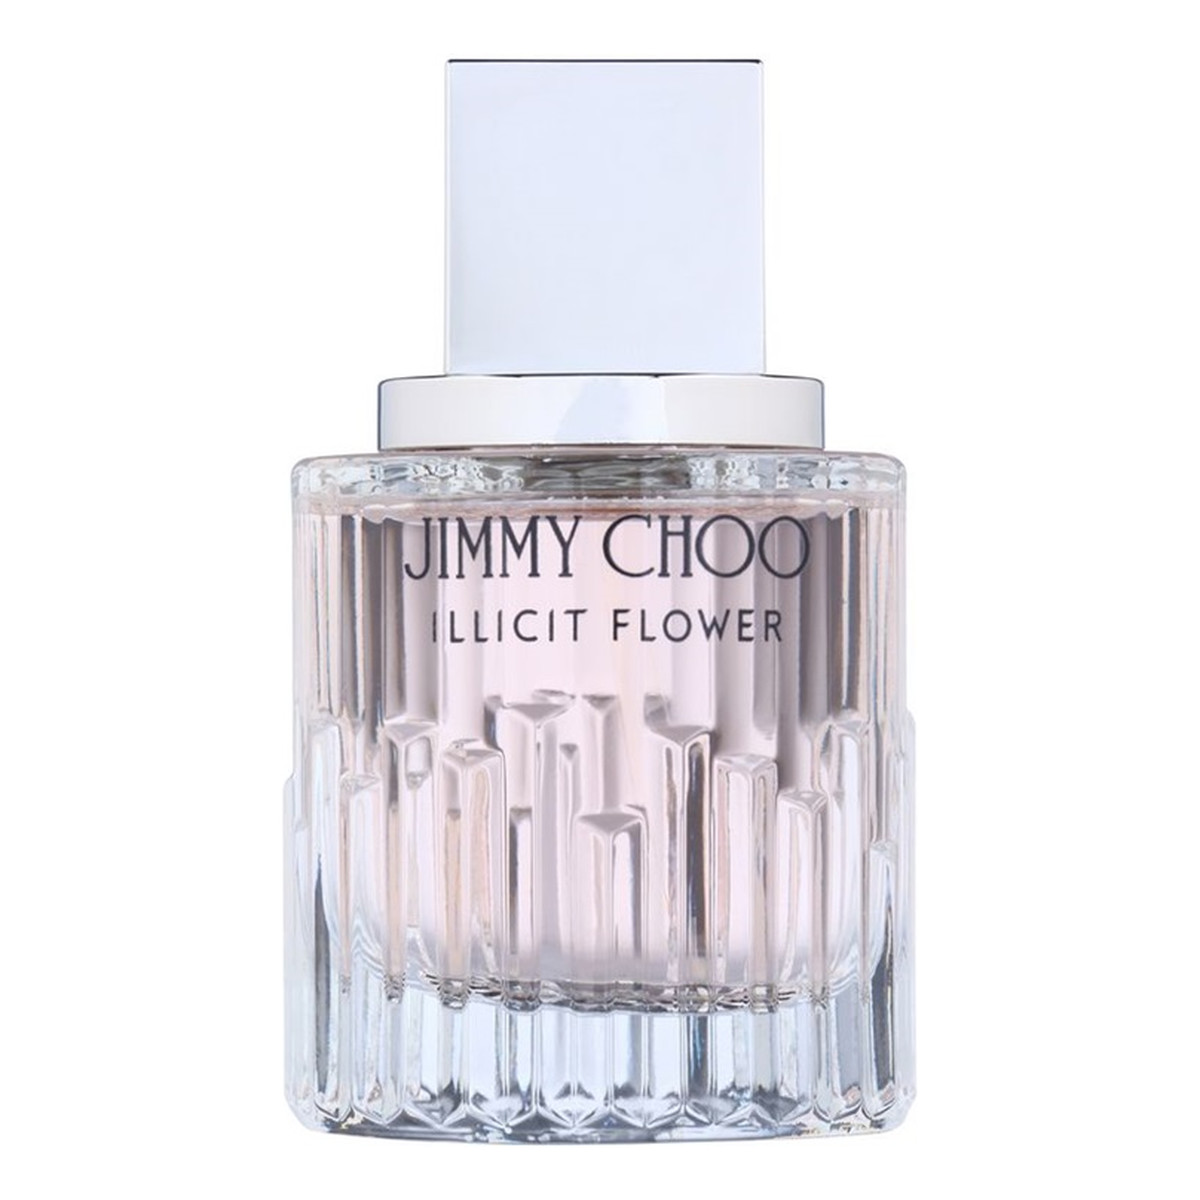 Jimmy Choo Illicit Flower woda perfumowana 40ml